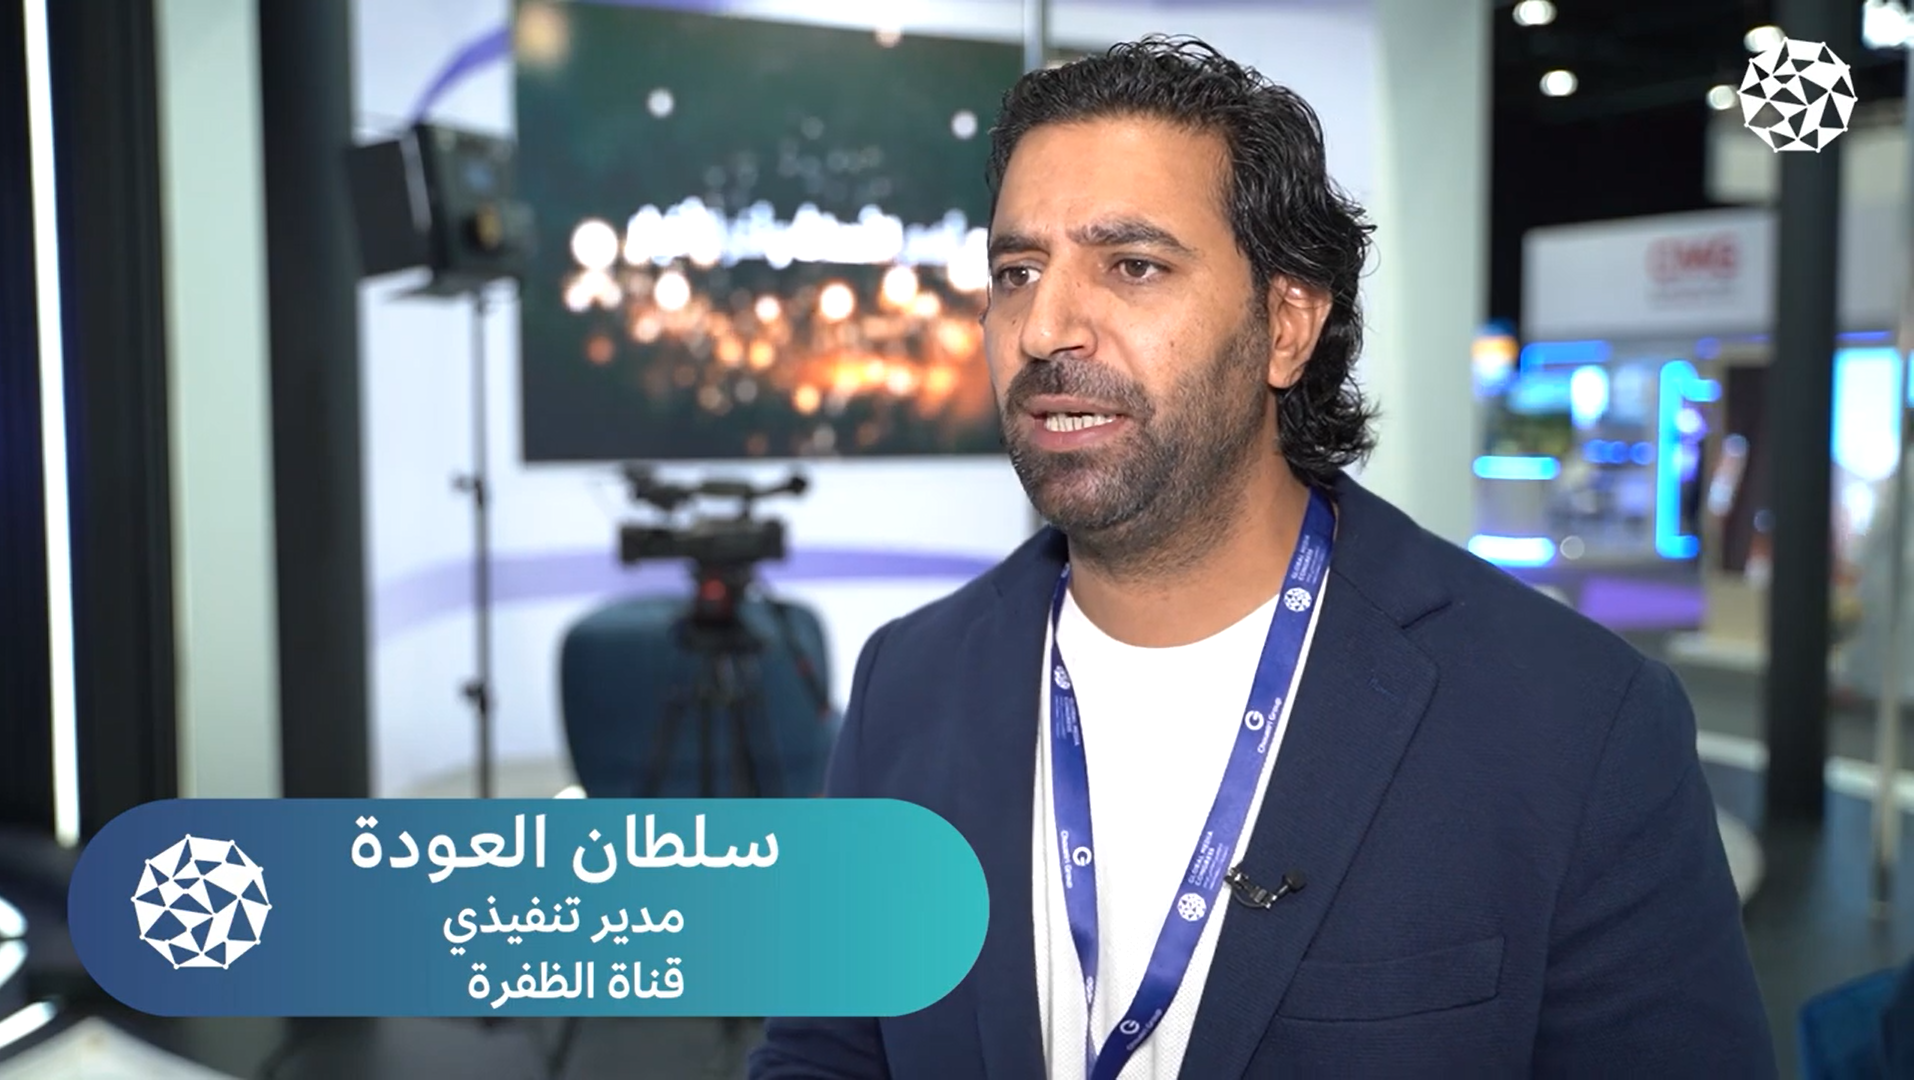 Sultan Aloda, Executive Manager, Al Dhafra TV